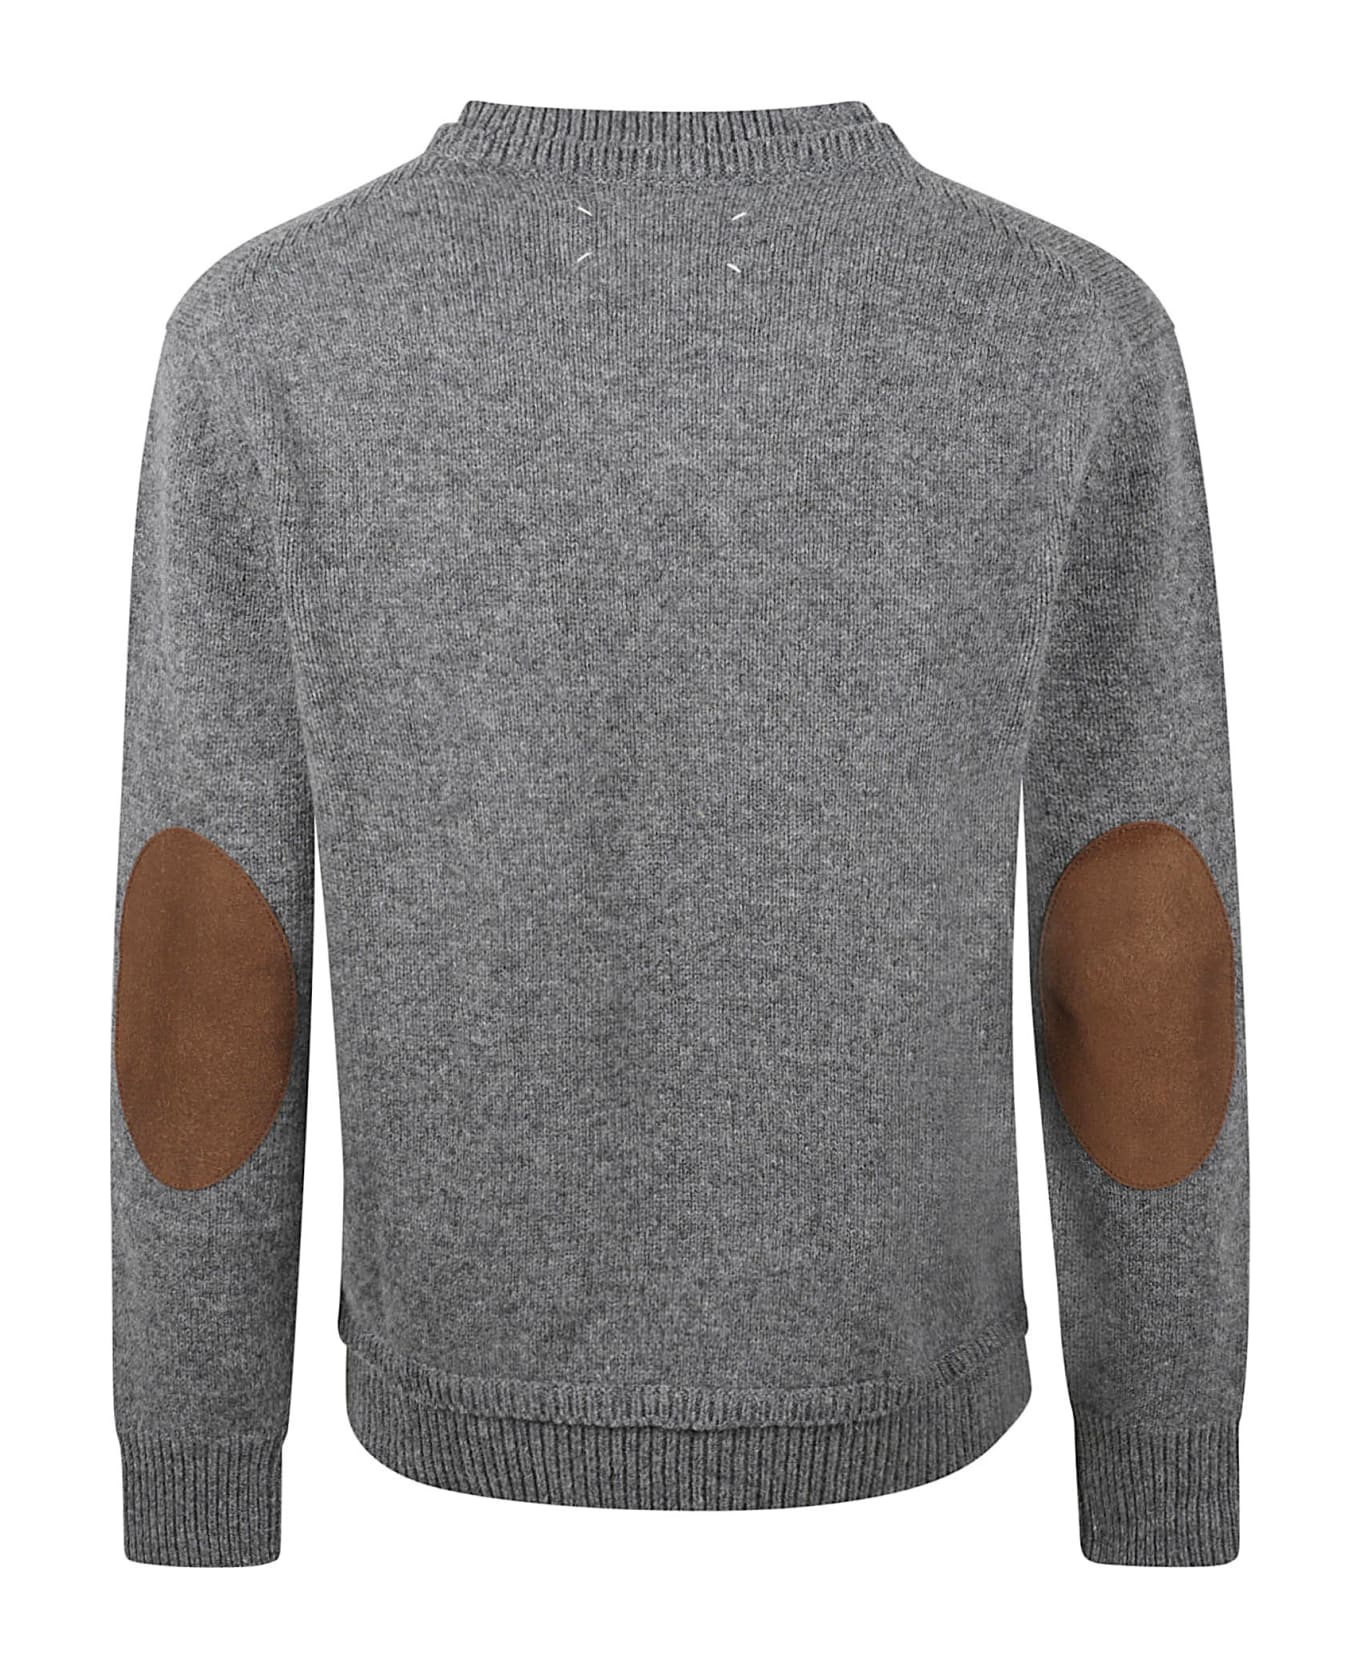 Maison Margiela Elbow Patch Sweater - MEDIUM GREY ニットウェア